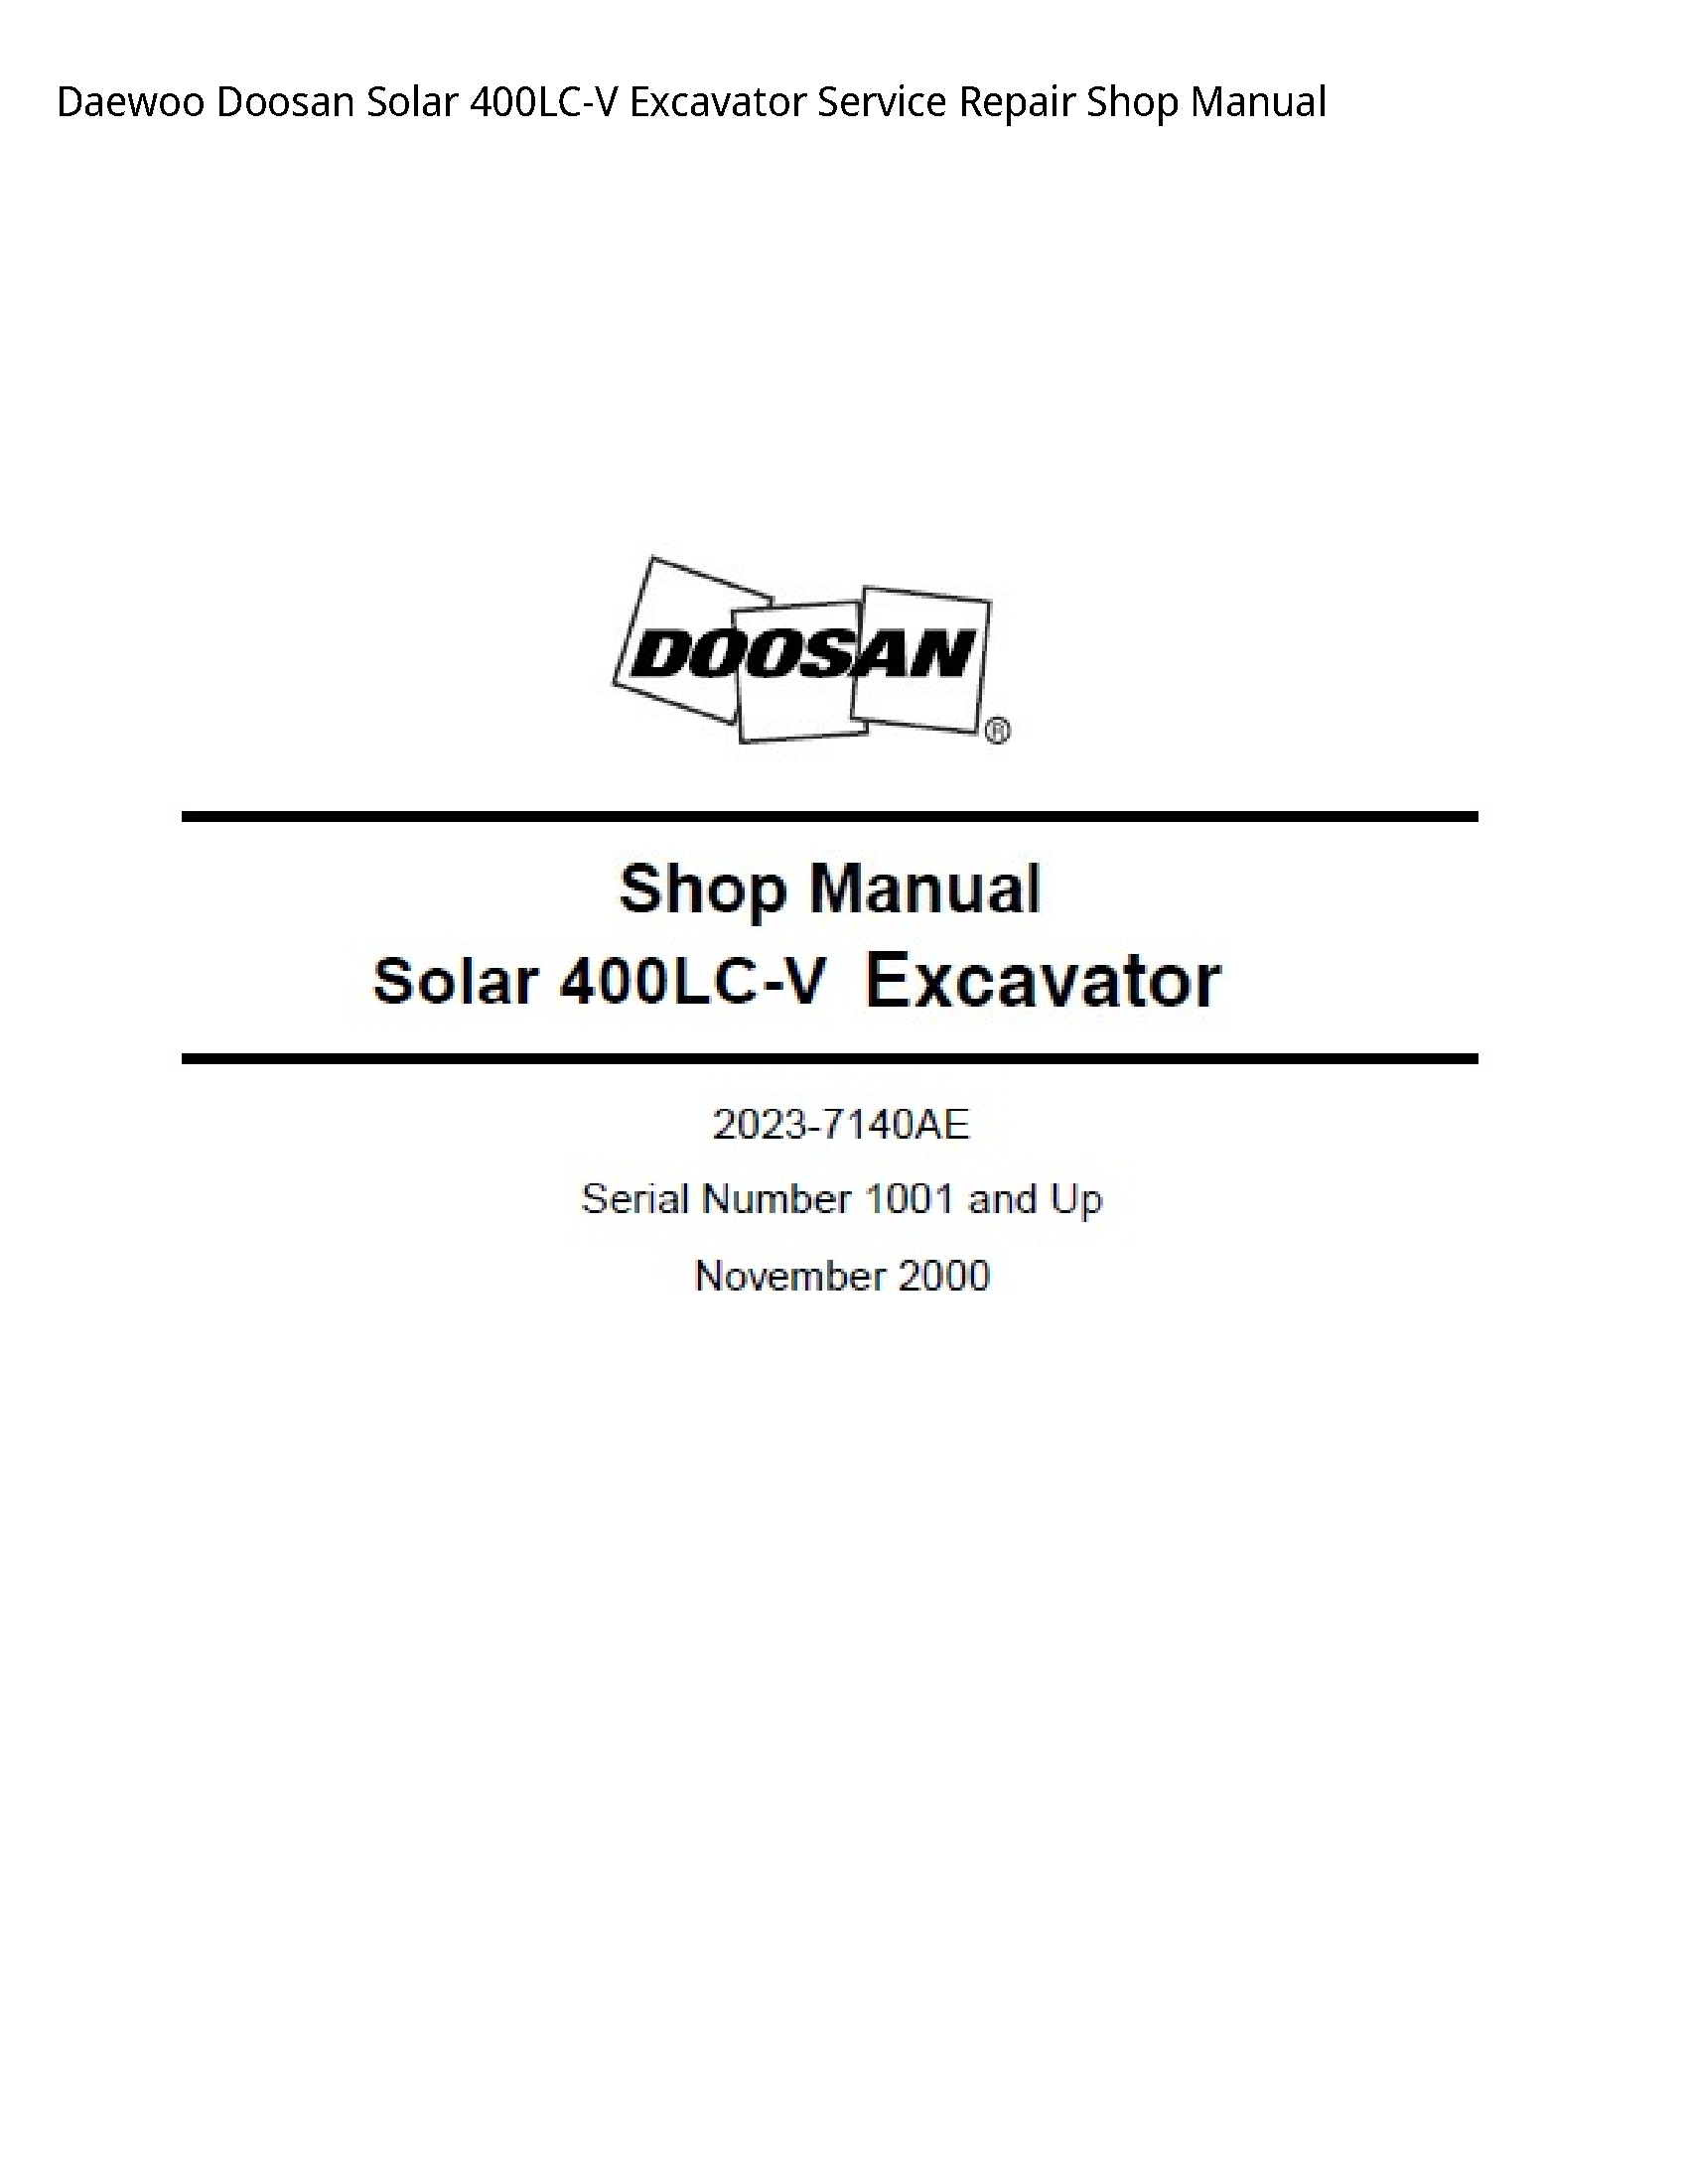 Daewoo Doosan 400LC-V Solar Excavator manual